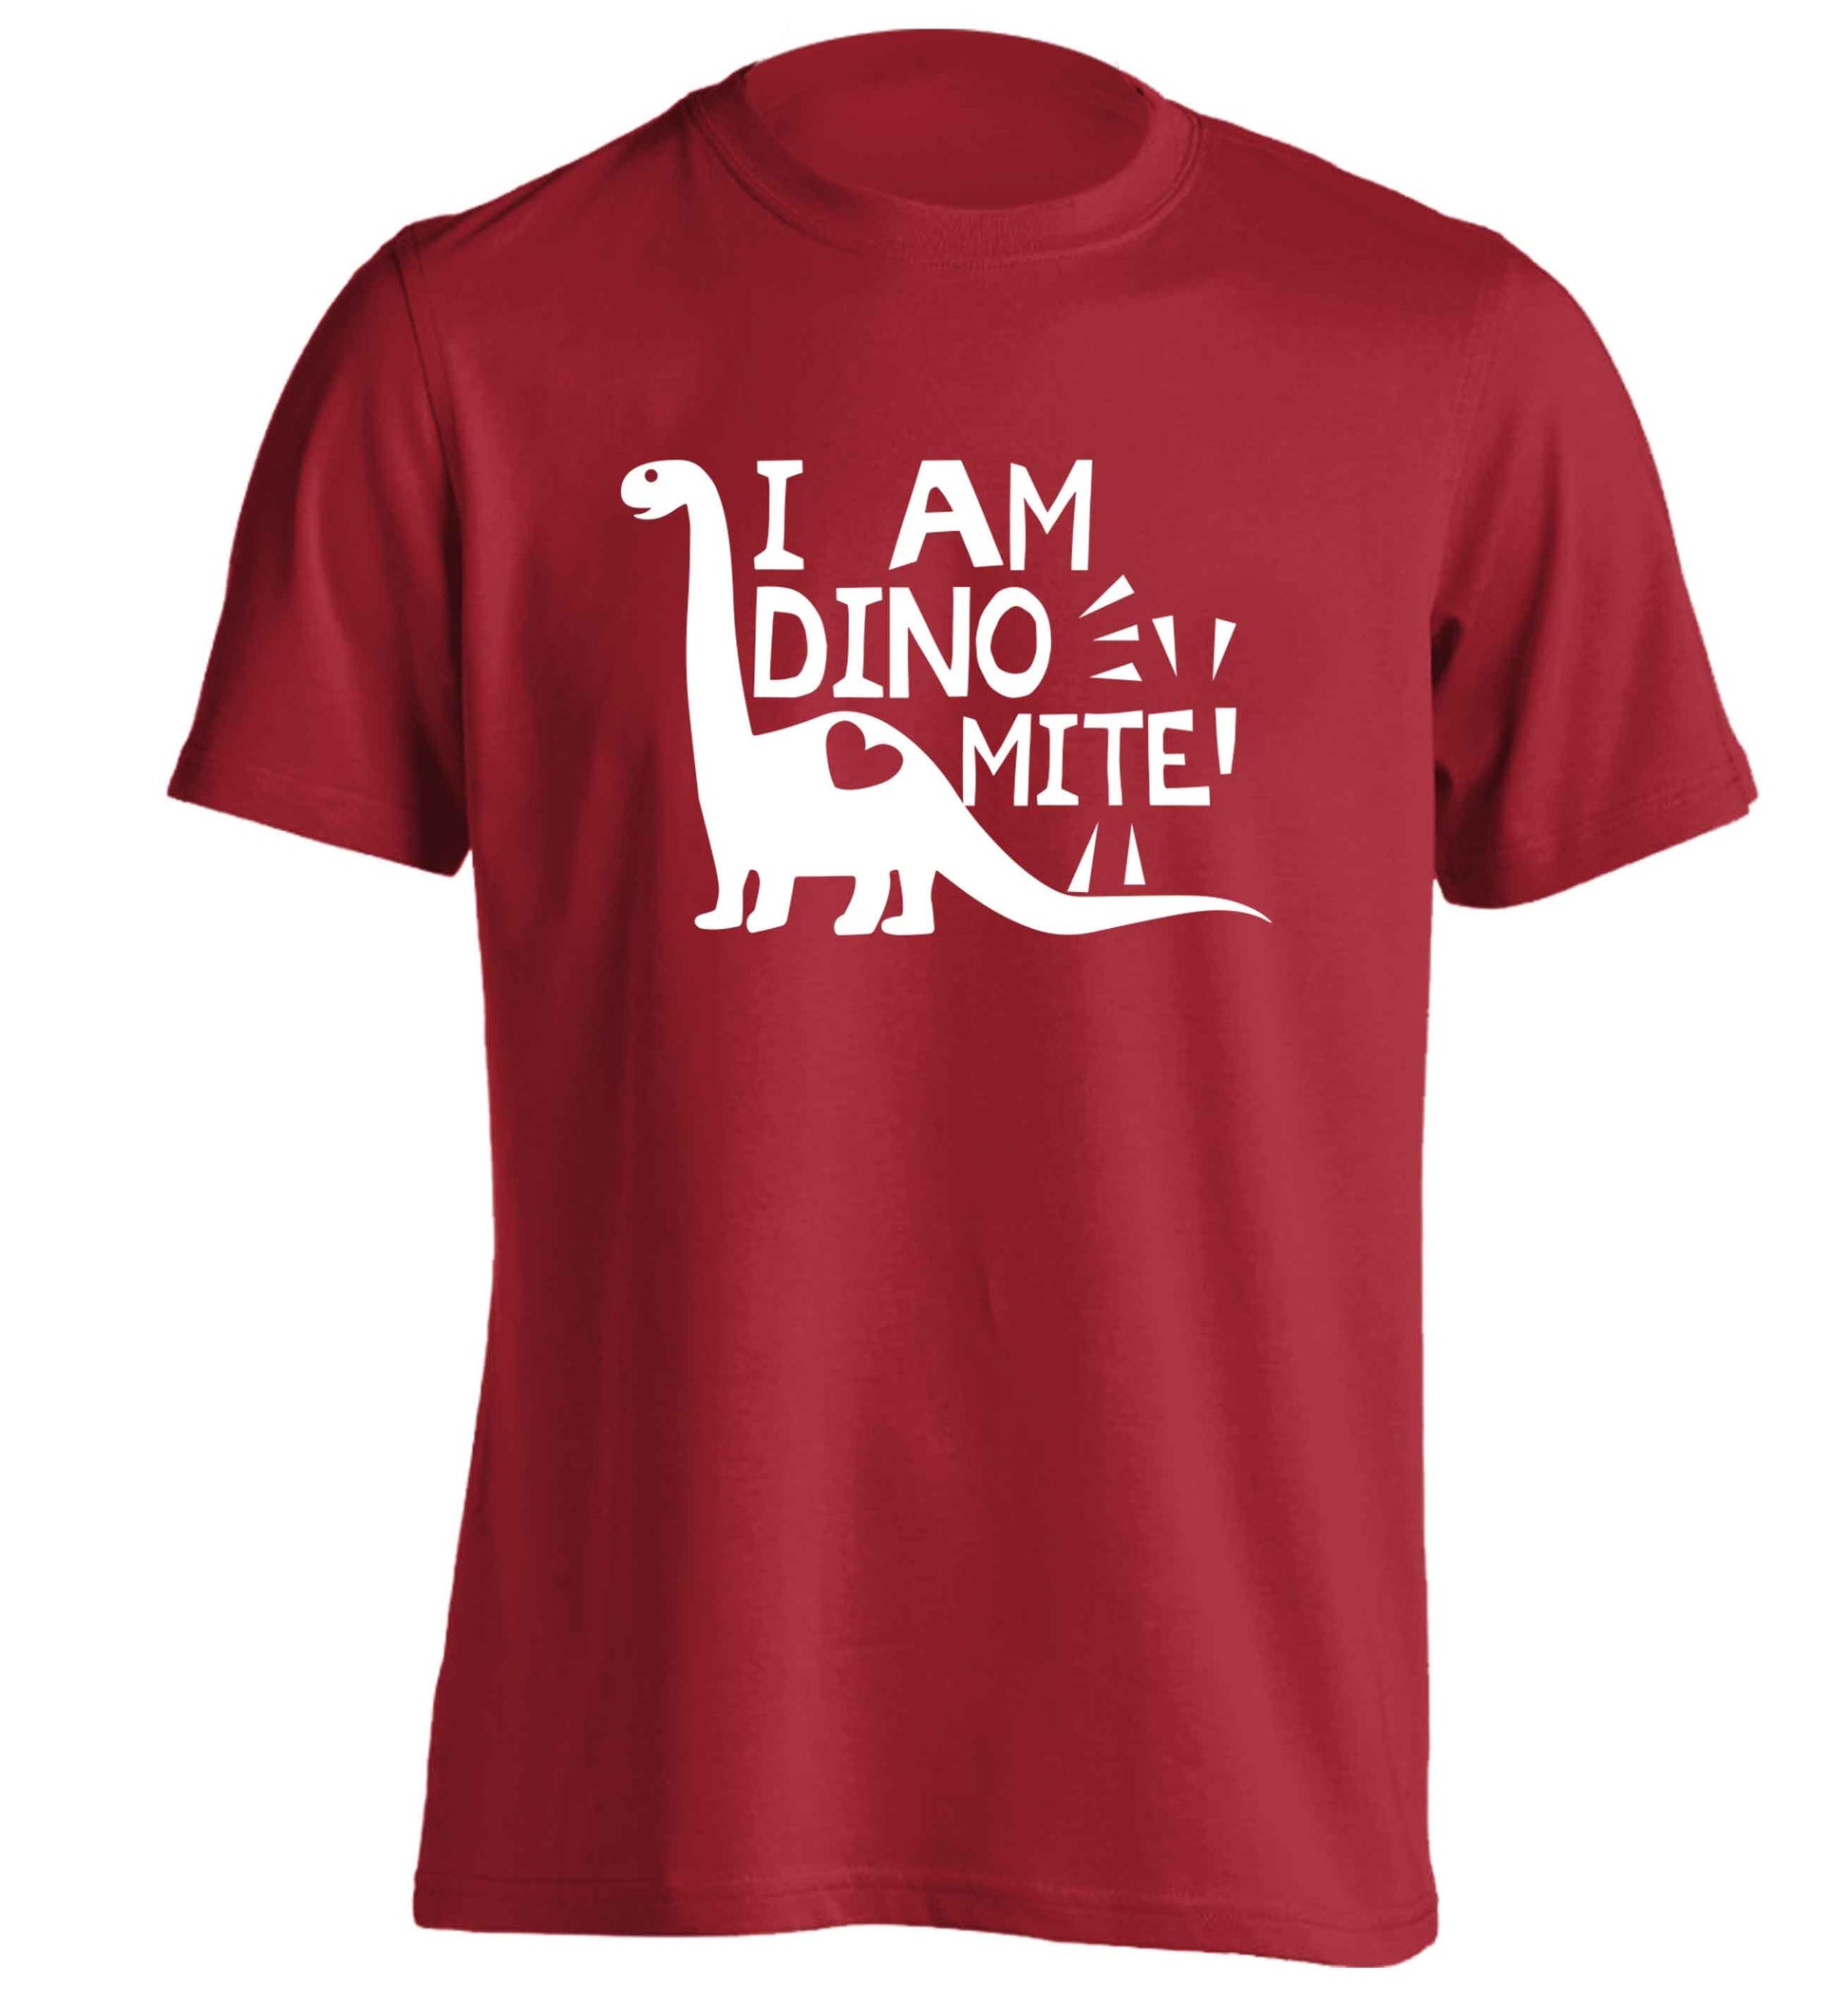 I am dinomite! adults unisex red Tshirt 2XL